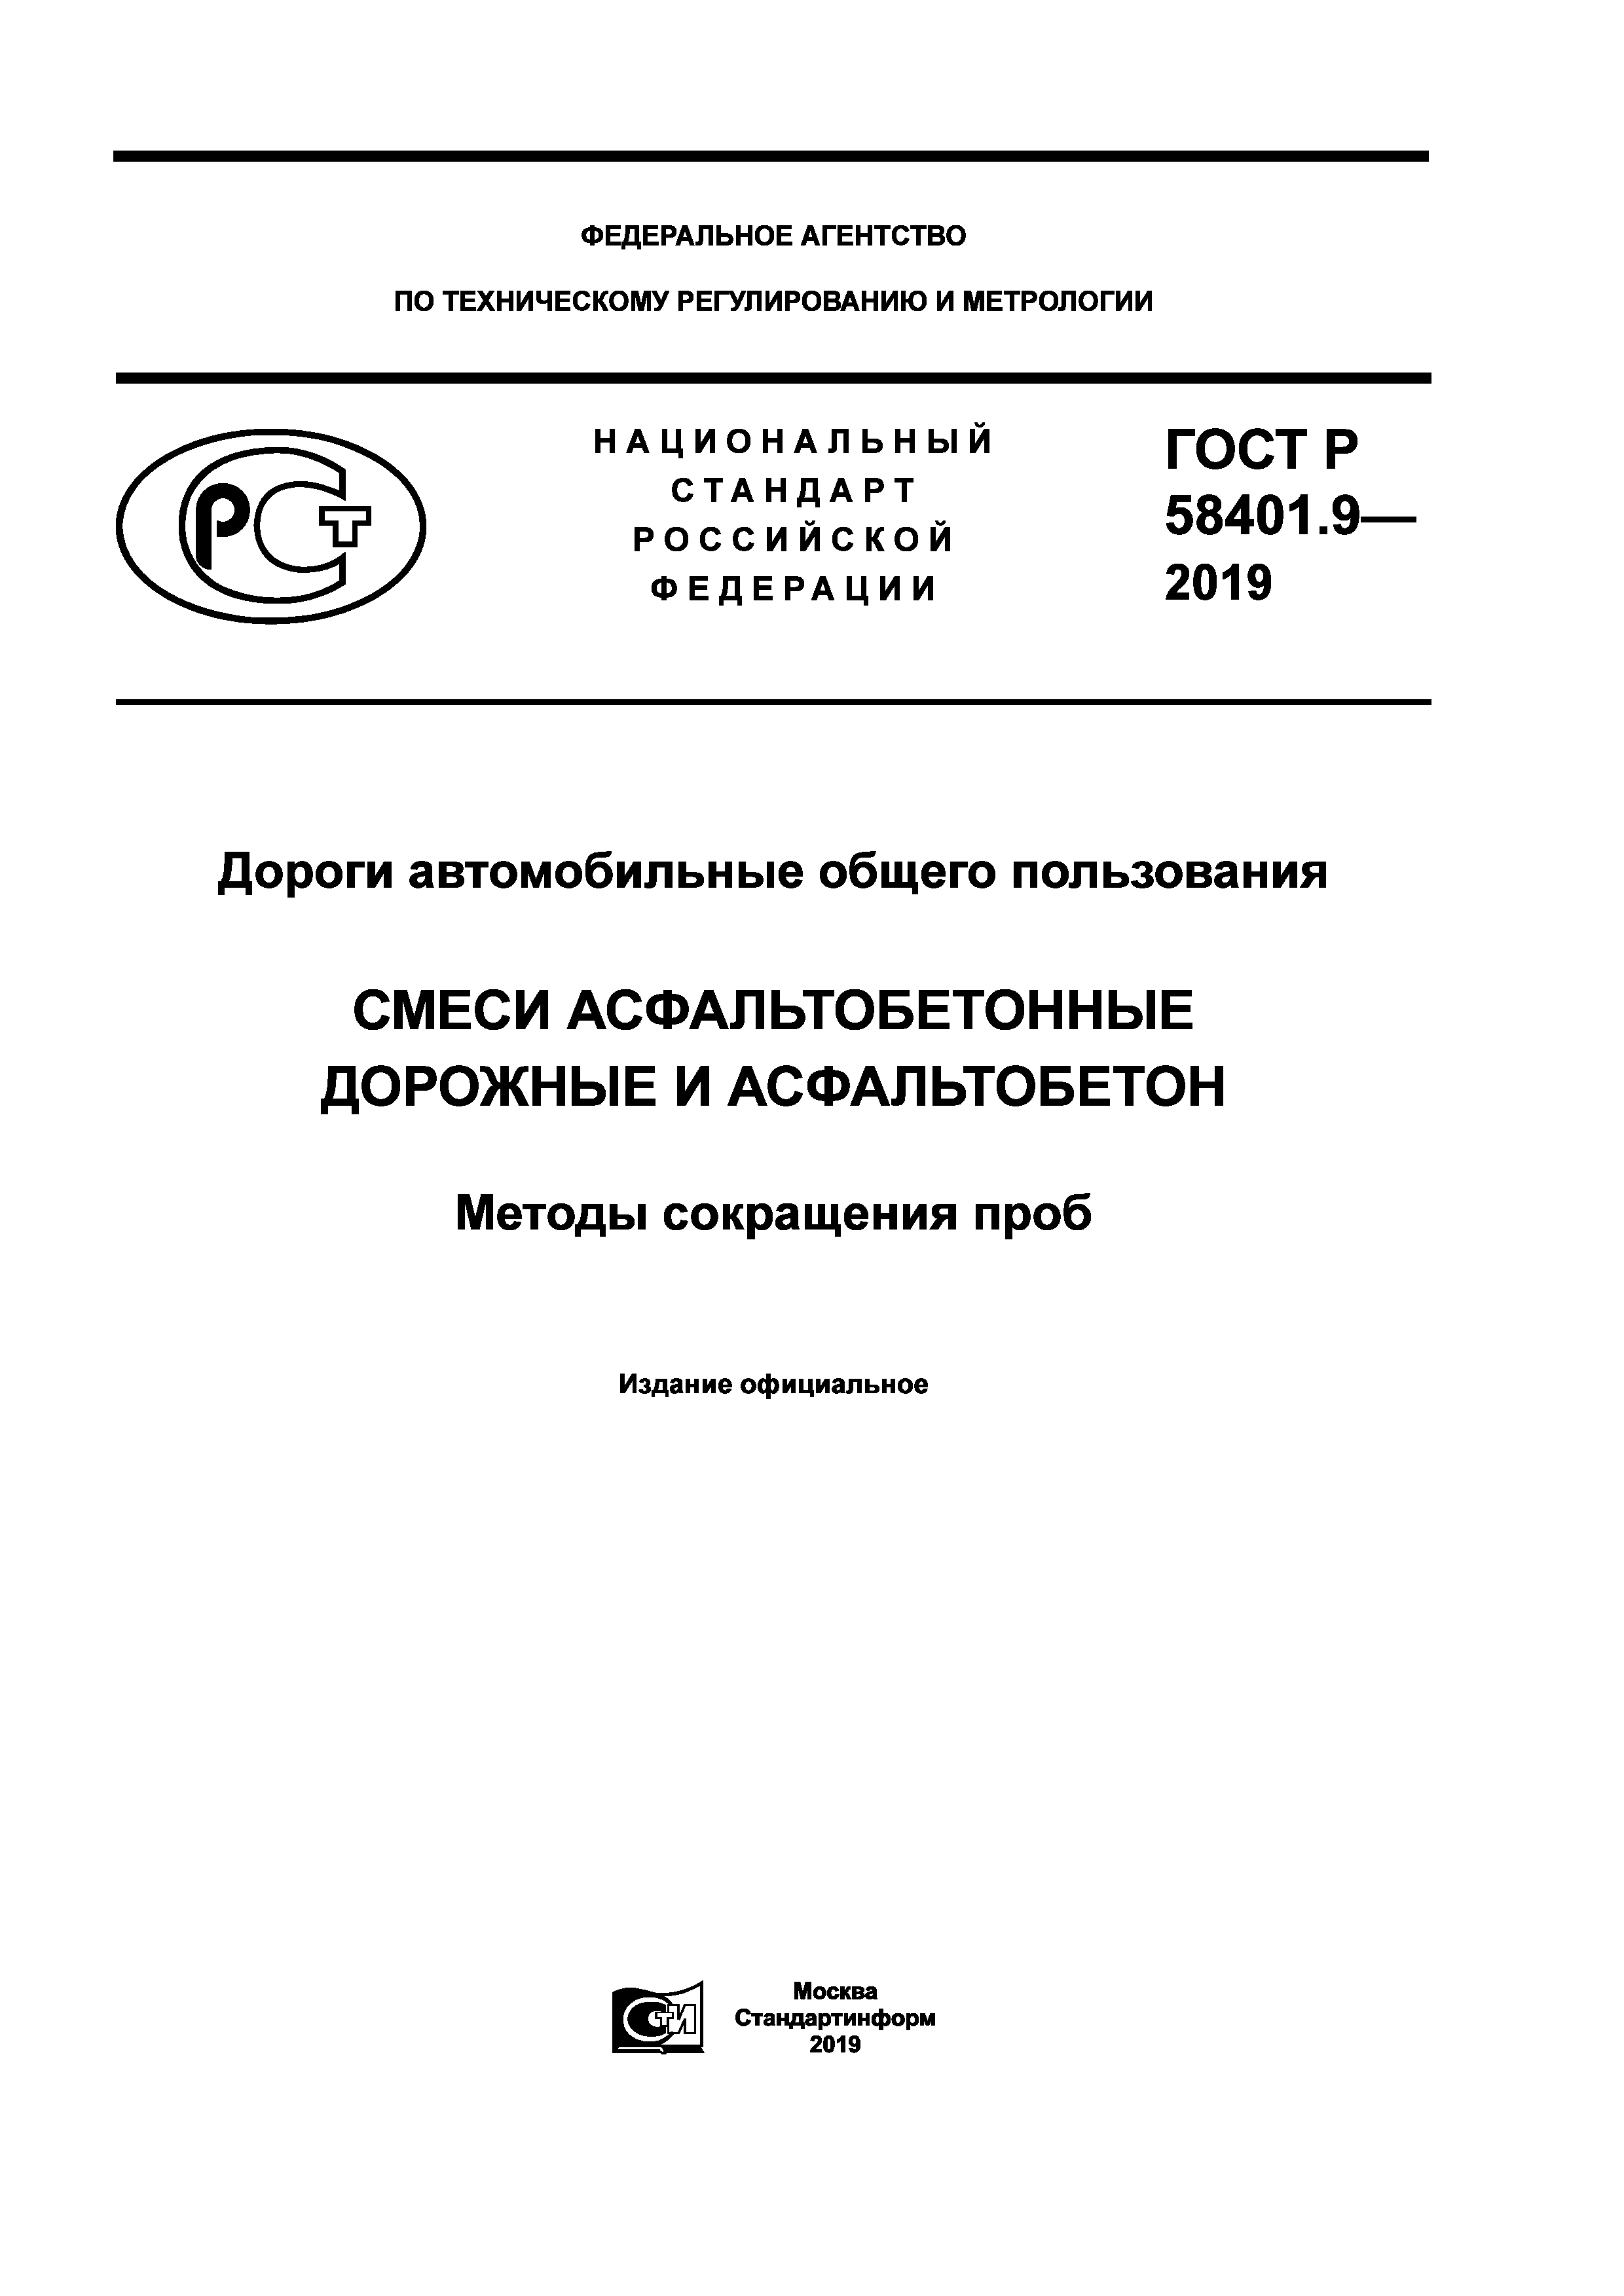 ГОСТ Р 58401.9-2019